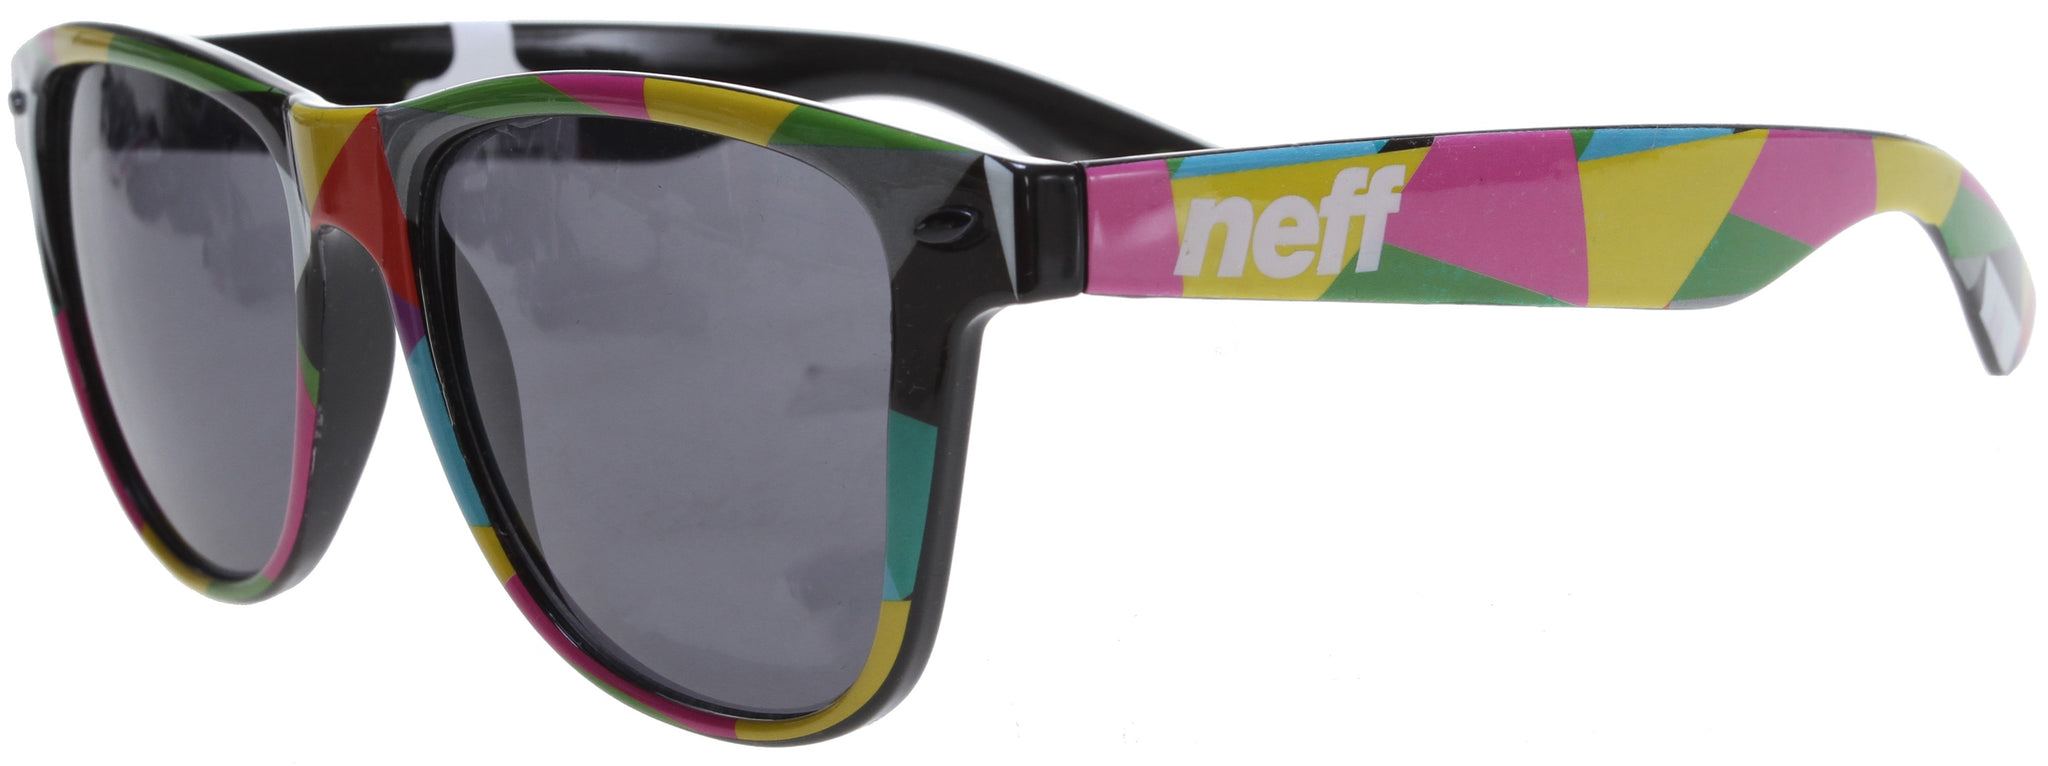 New NEFF Sunglasses 400 UV Protection - Abstract N99 (No Bag)